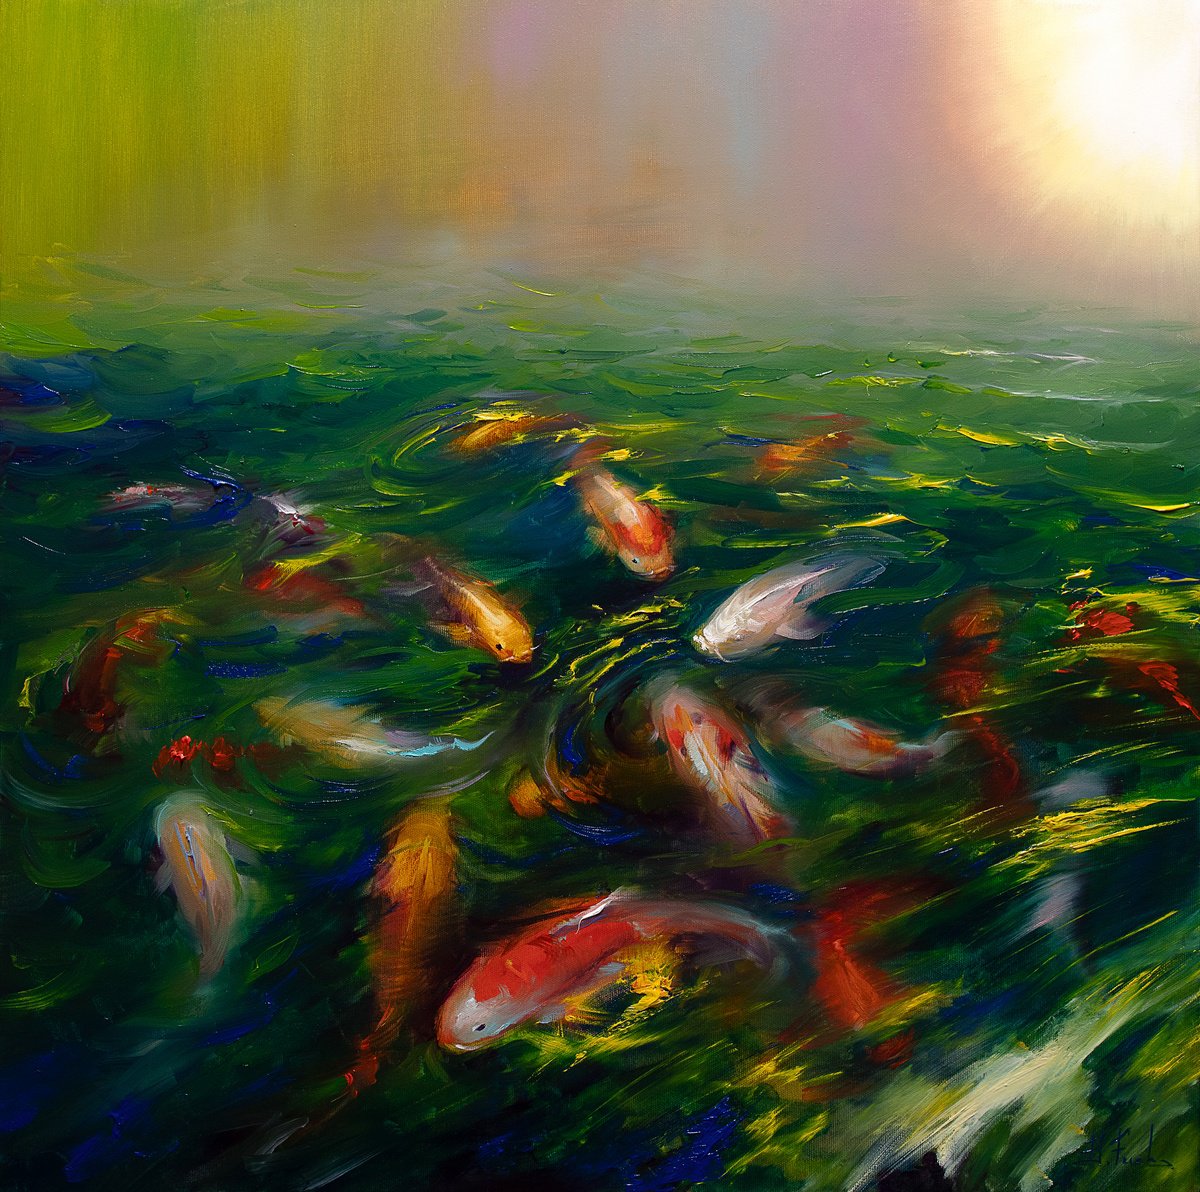 Koi fish in the pond by Bozhena Fuchs